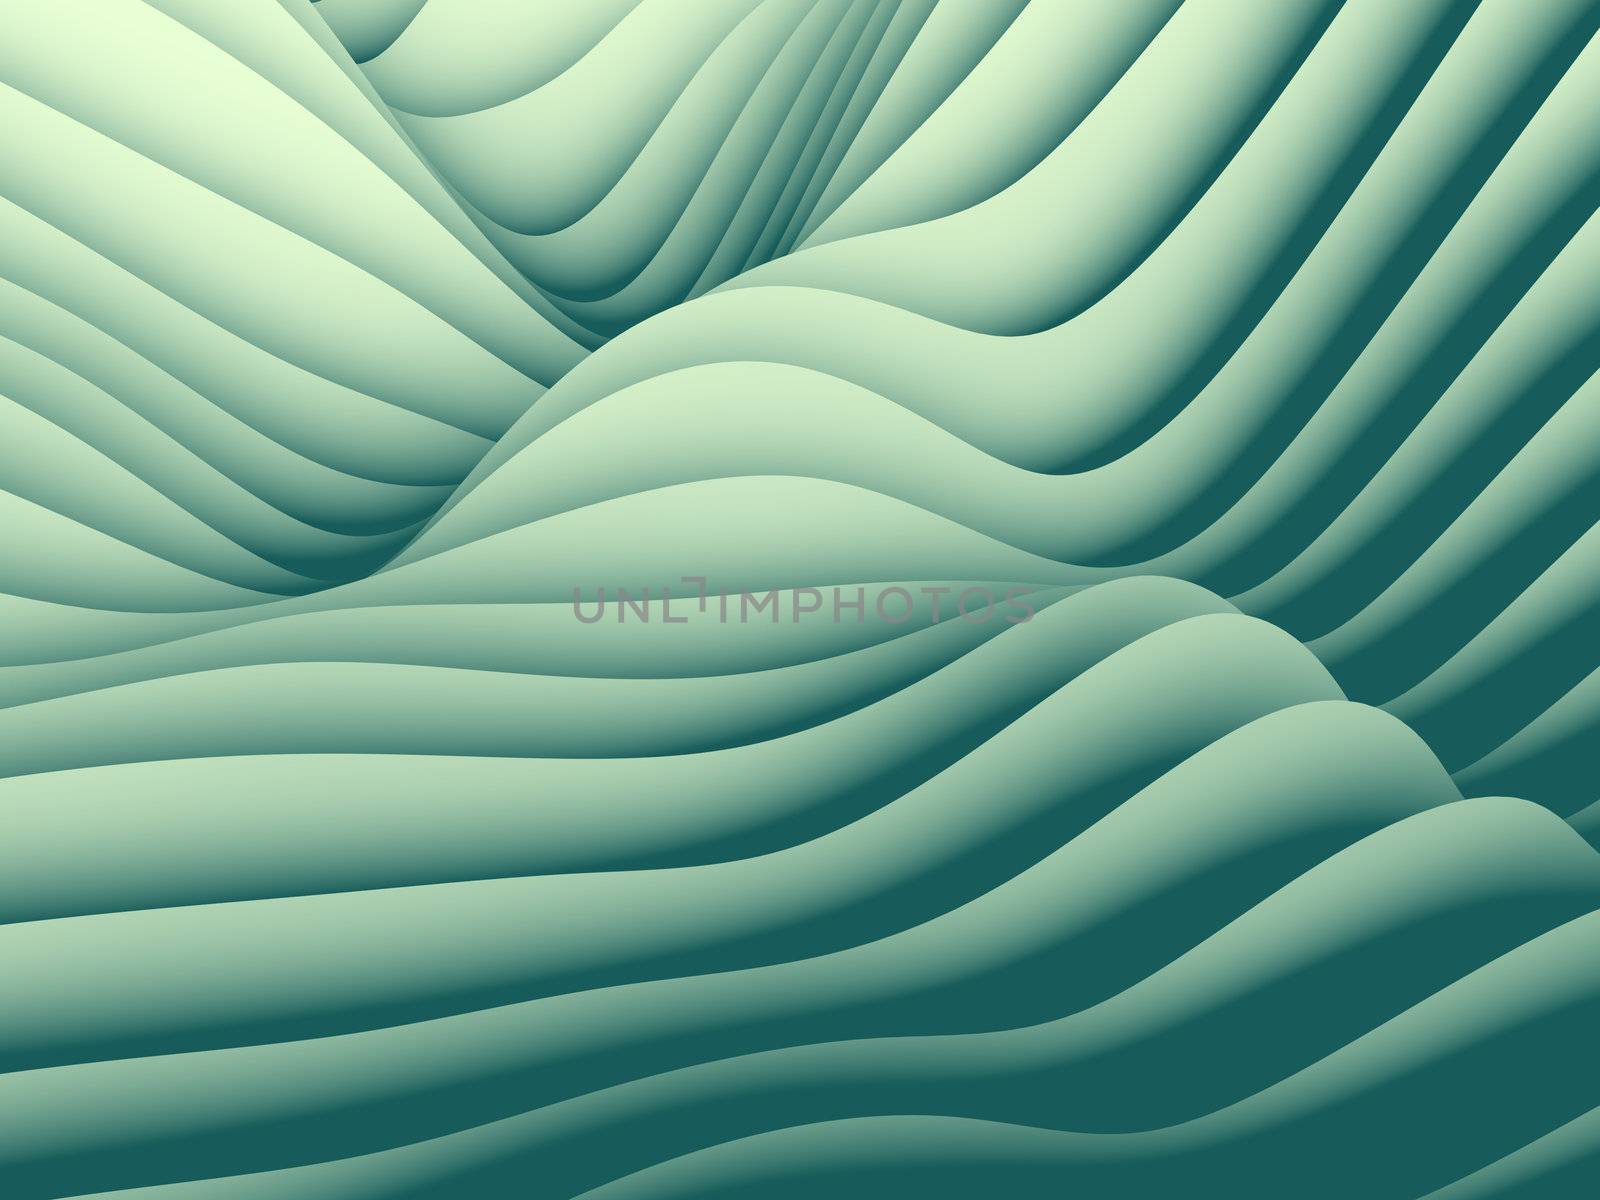 Undulating Wave Design Pattern by agsandrew